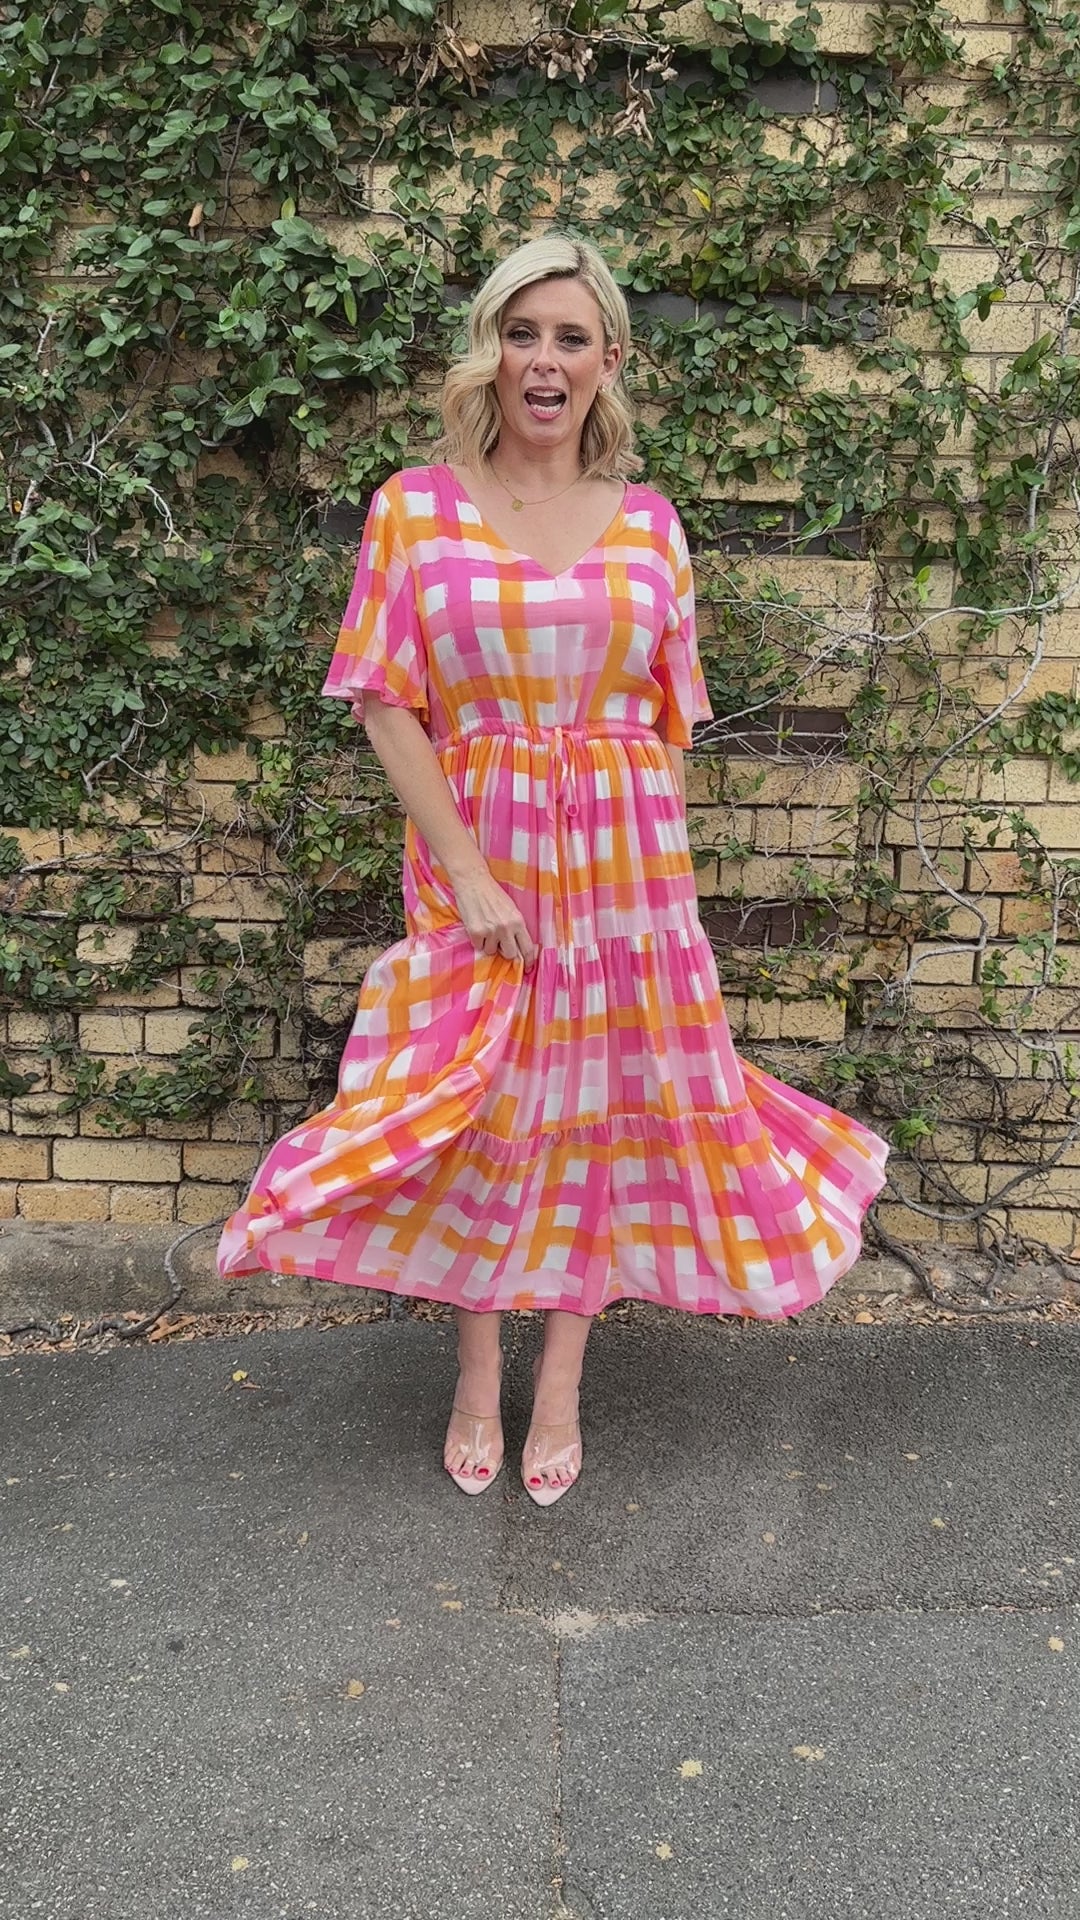 Plus-Sized Pink Orange Dresses | PQ Collection | Lili Dress in Mamba